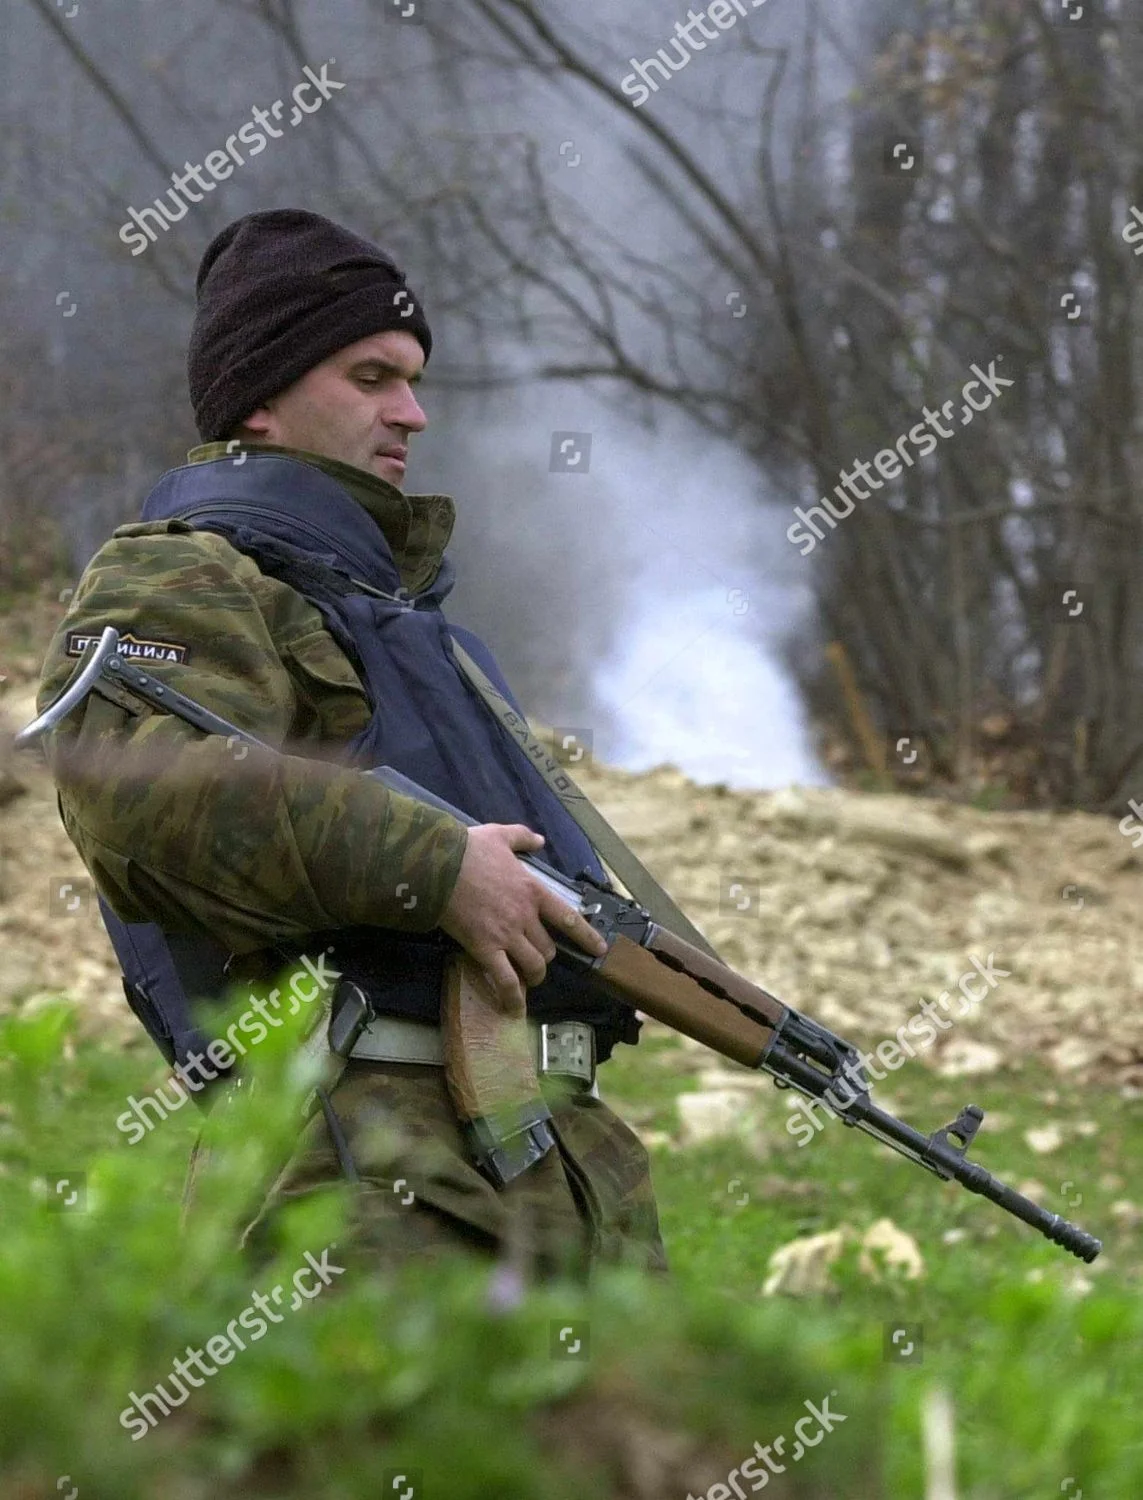 makedonia-police-position-mar-2001-shutterstock-editorial-8482567a.jpg